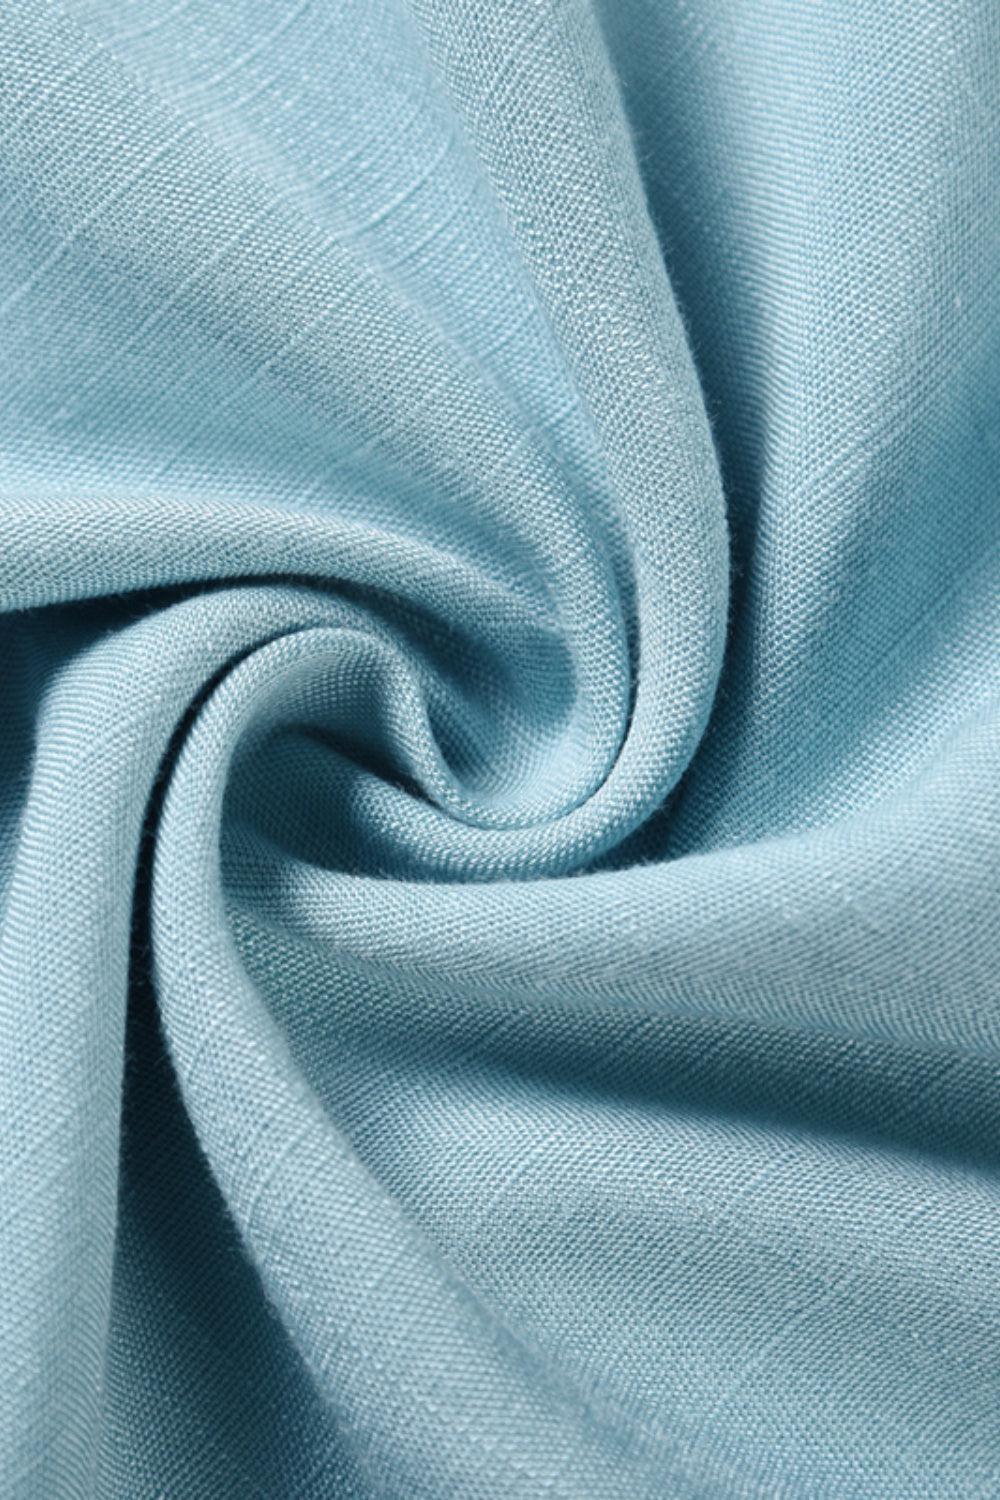 a close up of a light blue fabric